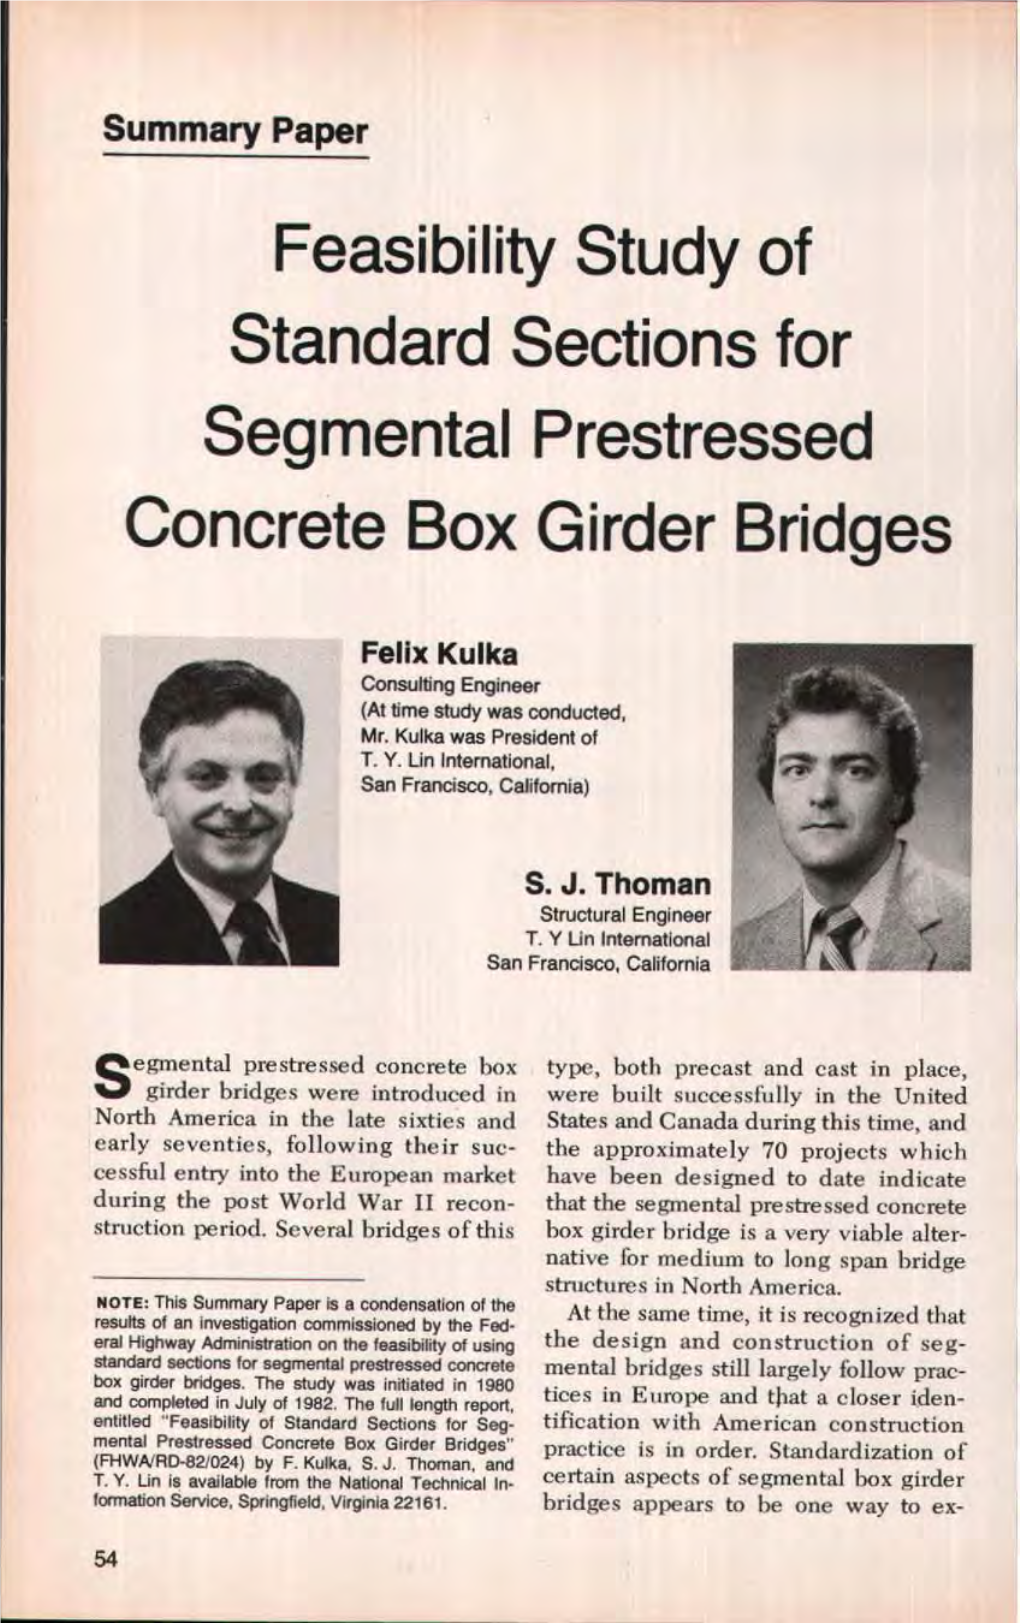 Feasibility Study of Standard Sections for Segmental Prestressed Concrete Box Girder Bridges